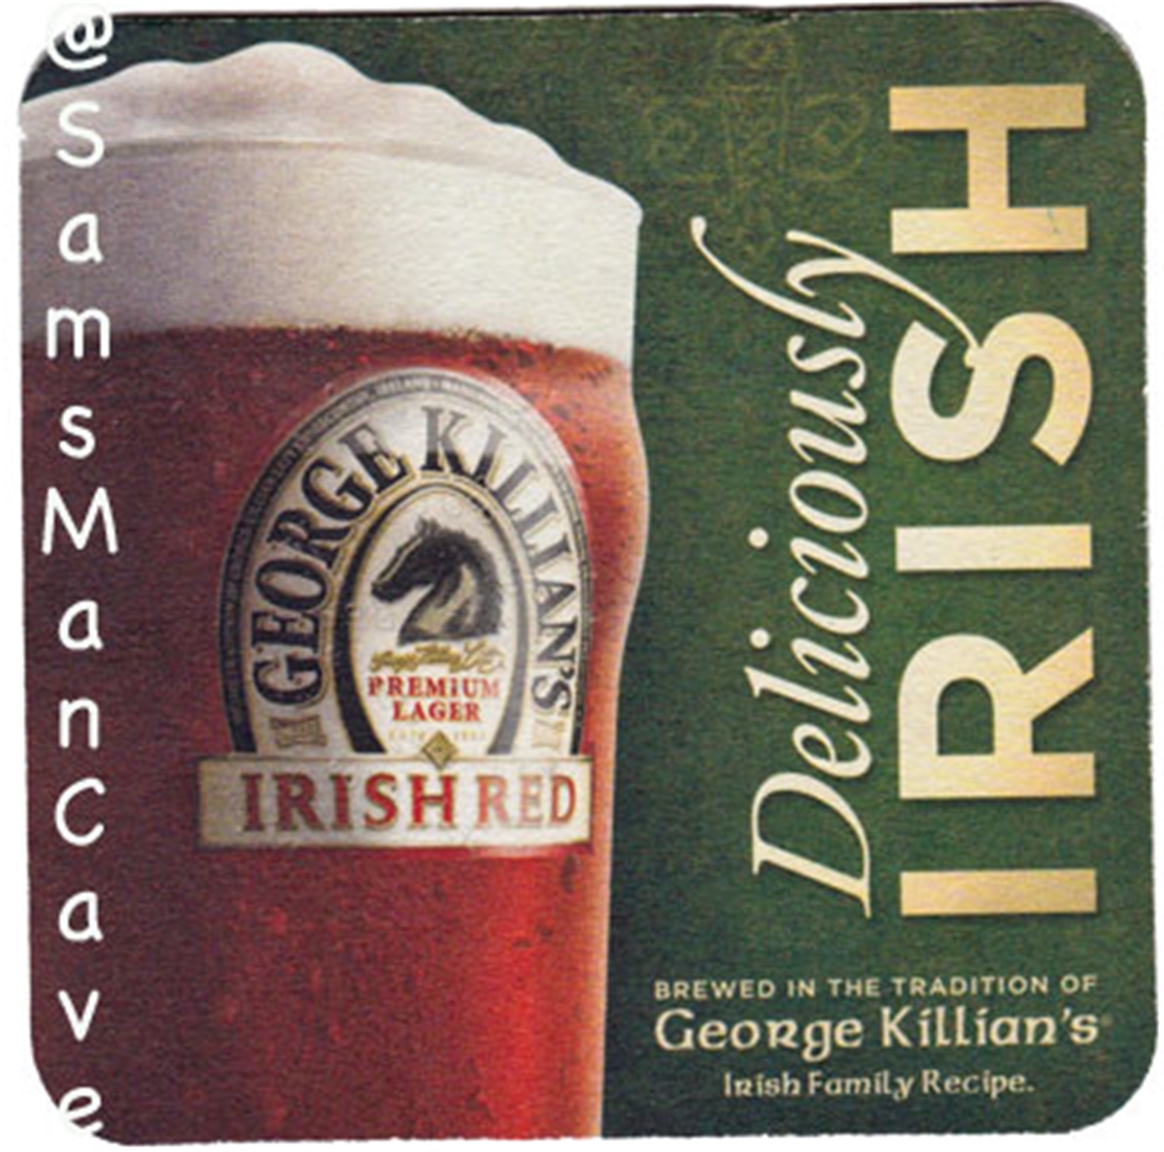 PAT'S FOR RILEY Beer COASTER COLORADO 2012 ST GEORGE KILLIAN'S IRISH RED Mat 